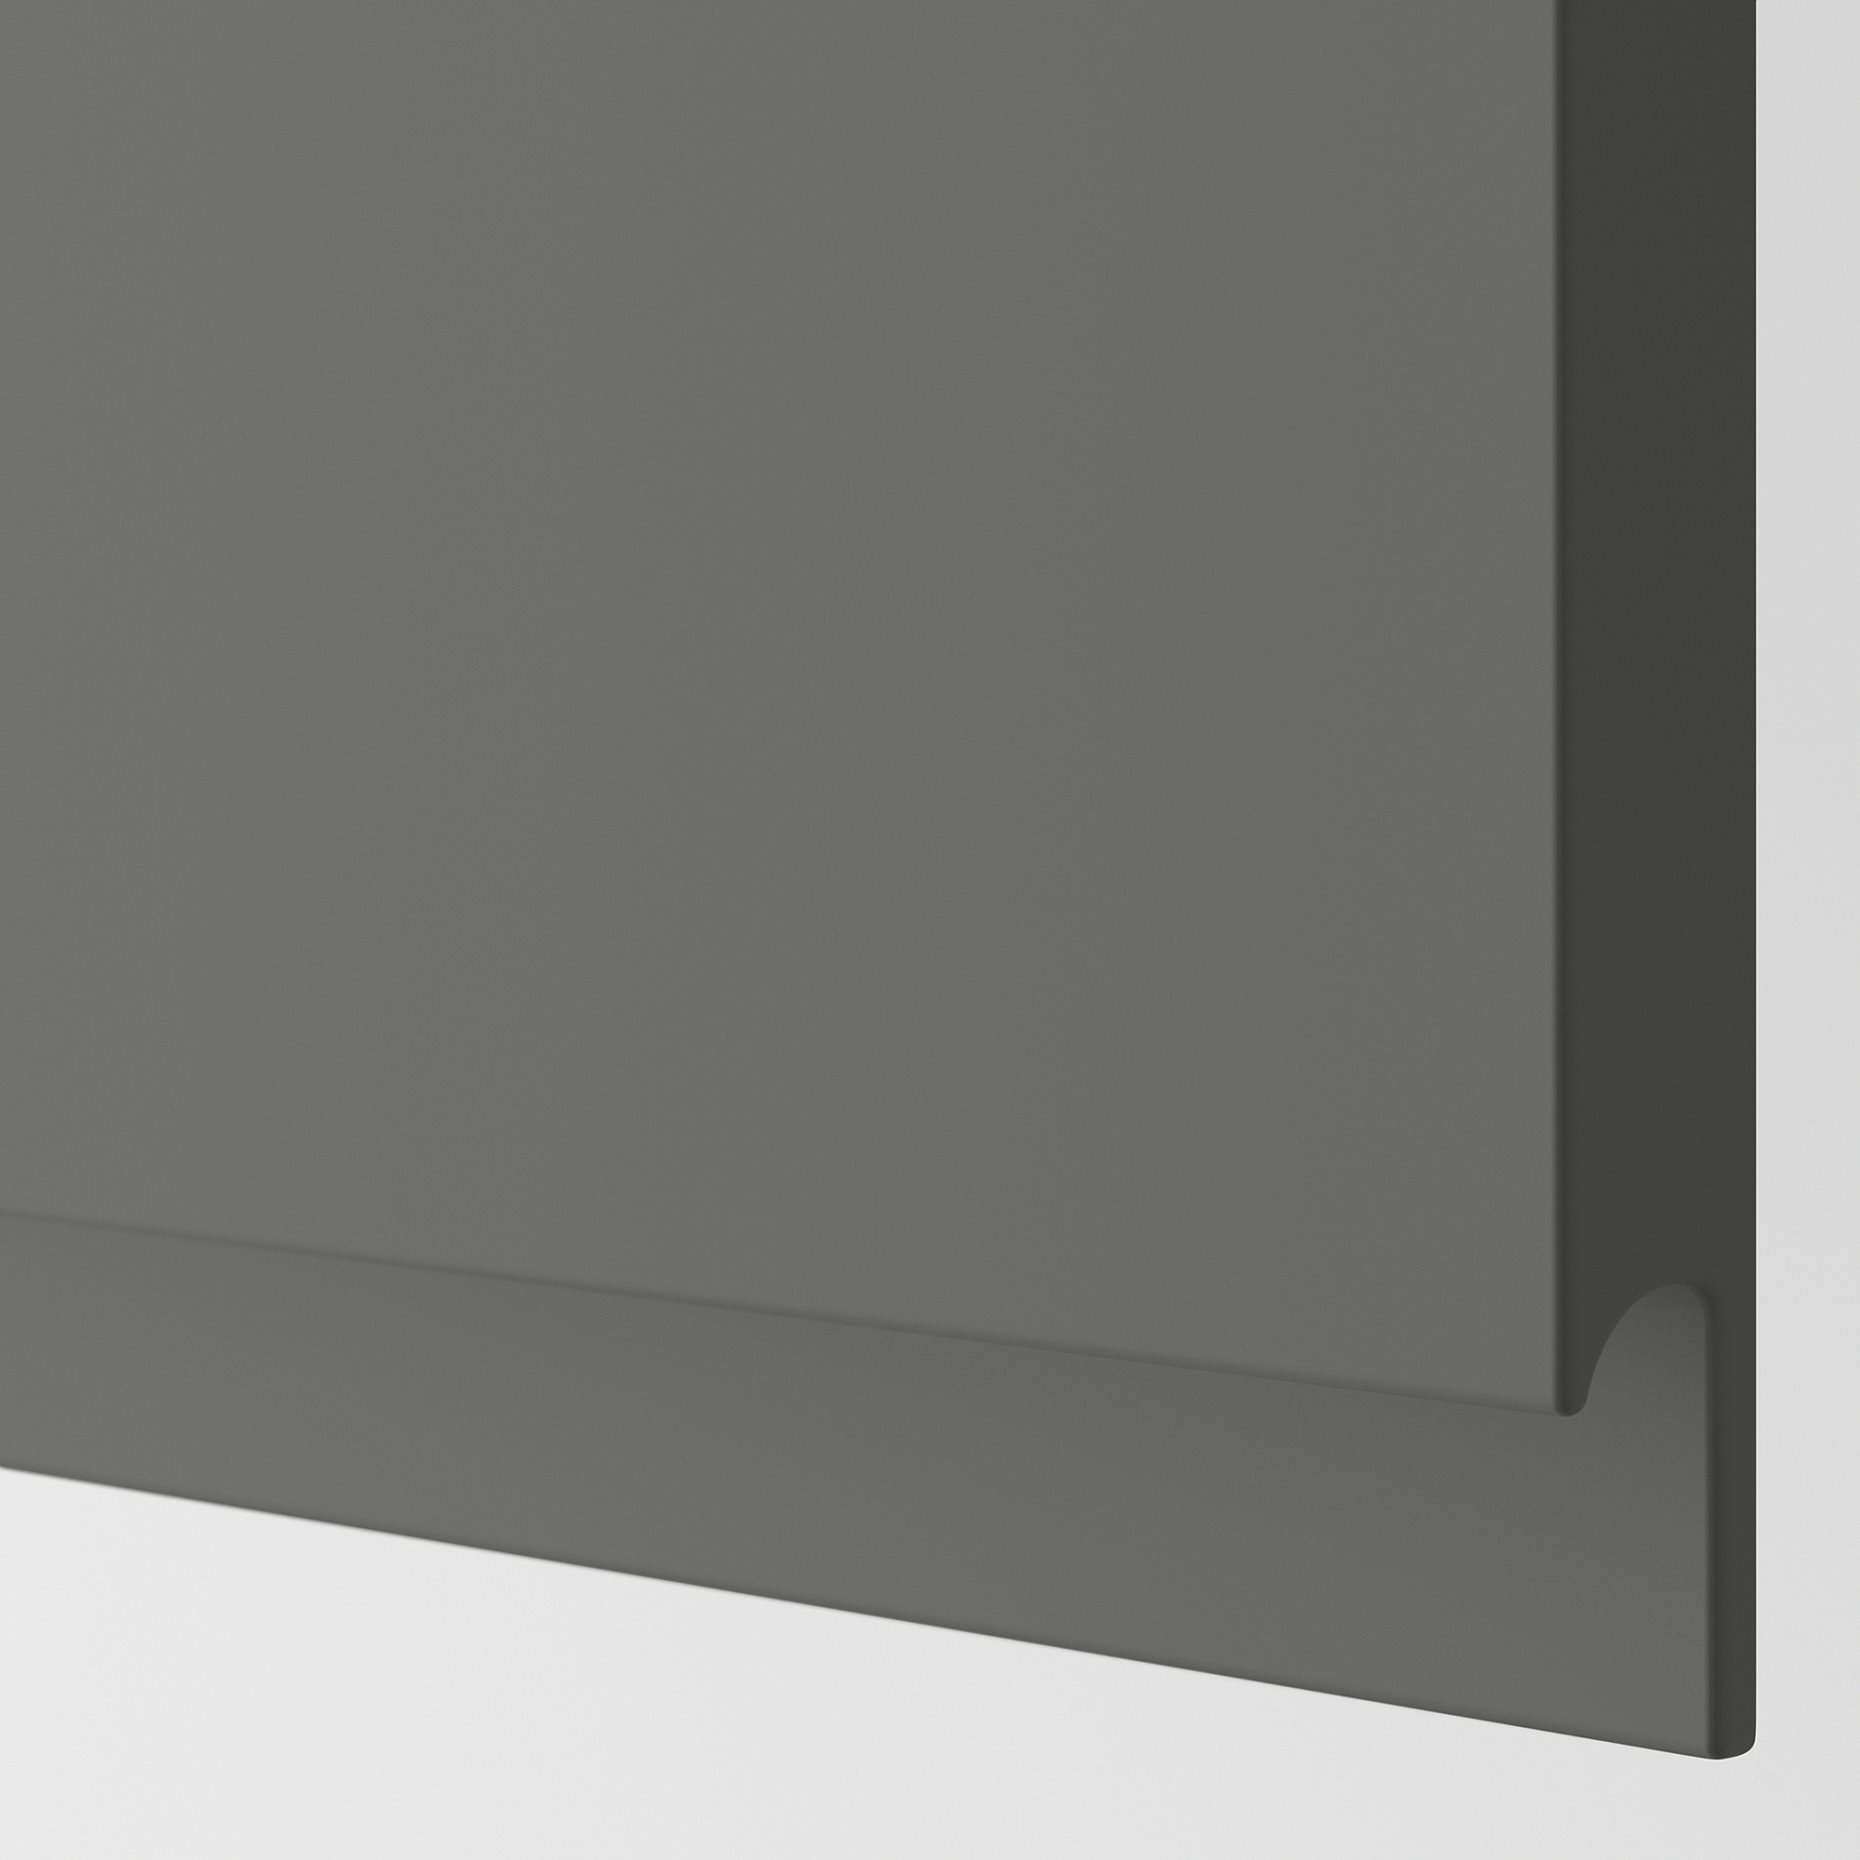 METOD, ντουλάπι τοίχου με ράφια, 40x60 cm, 894.566.66